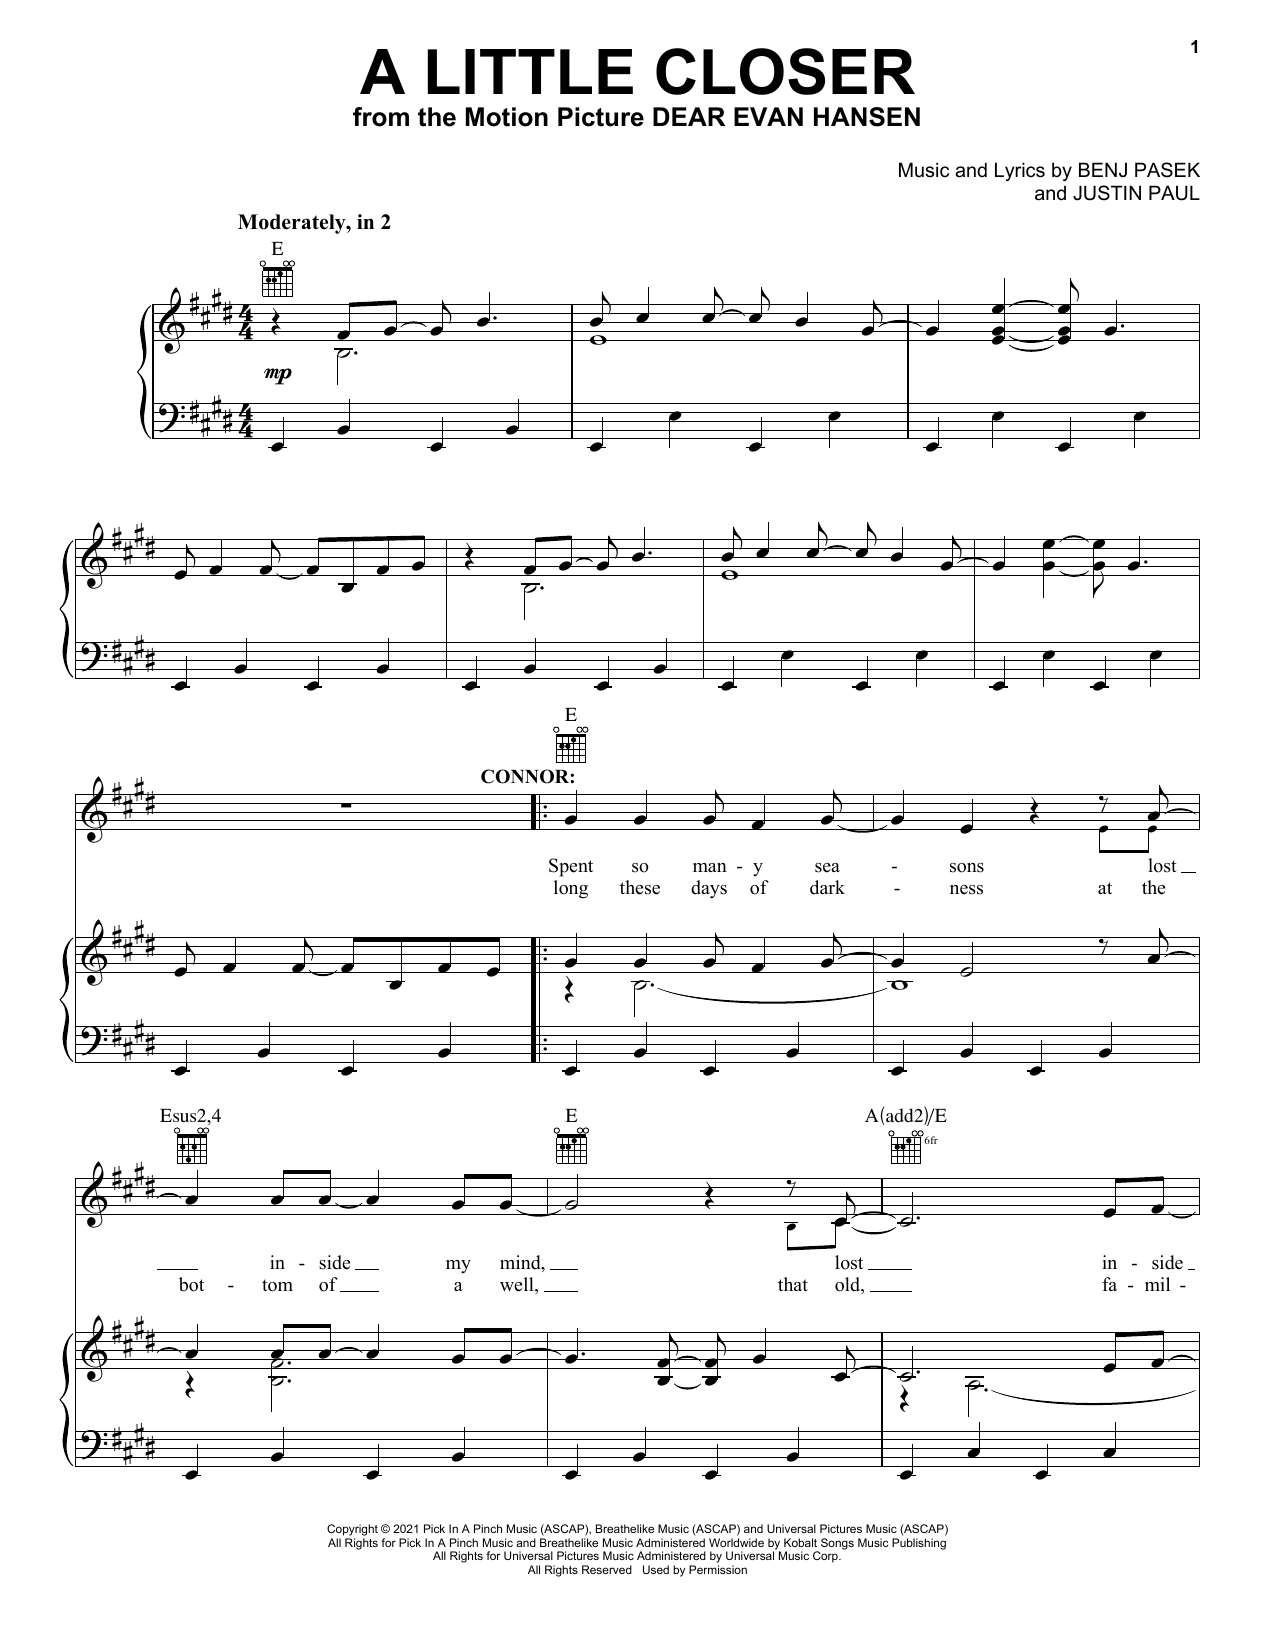 Pasek & Paul A Little Closer (from Dear Evan Hansen) sheet music notes and chords arranged for Guitar Tab